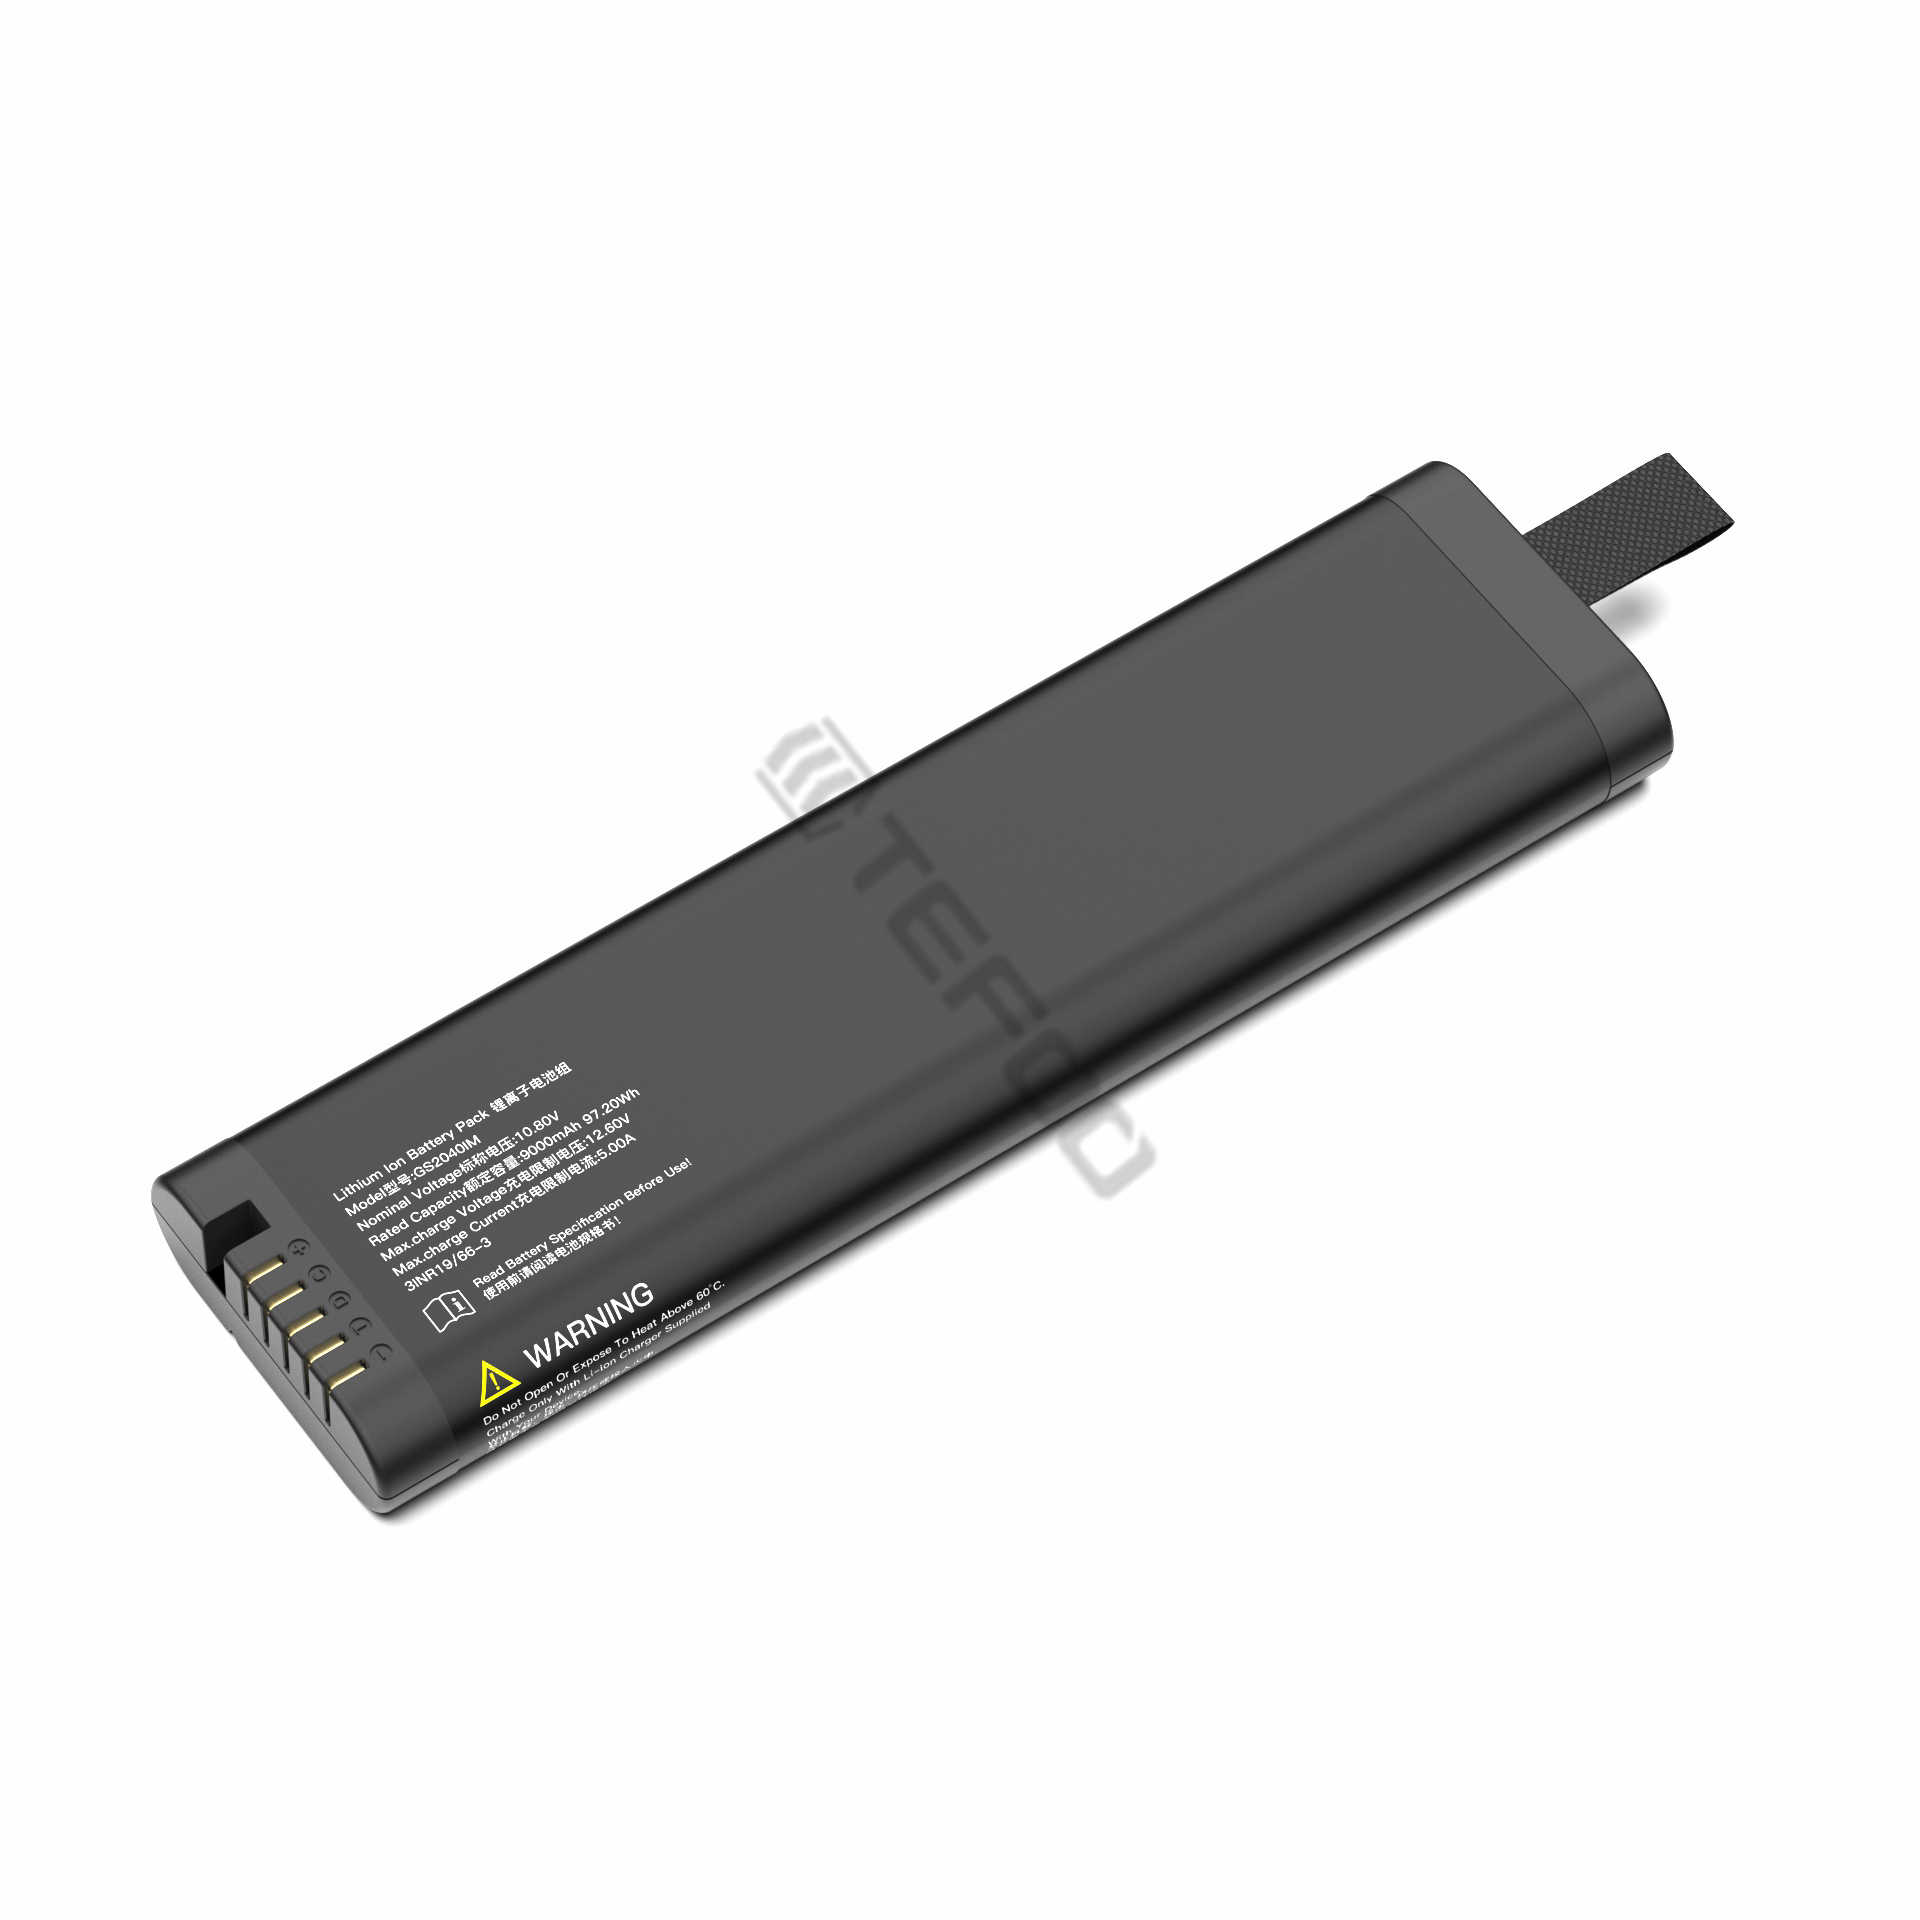 tefoo-standard-smart-battery-pack-GS2040IM-replacement-RRC-battery